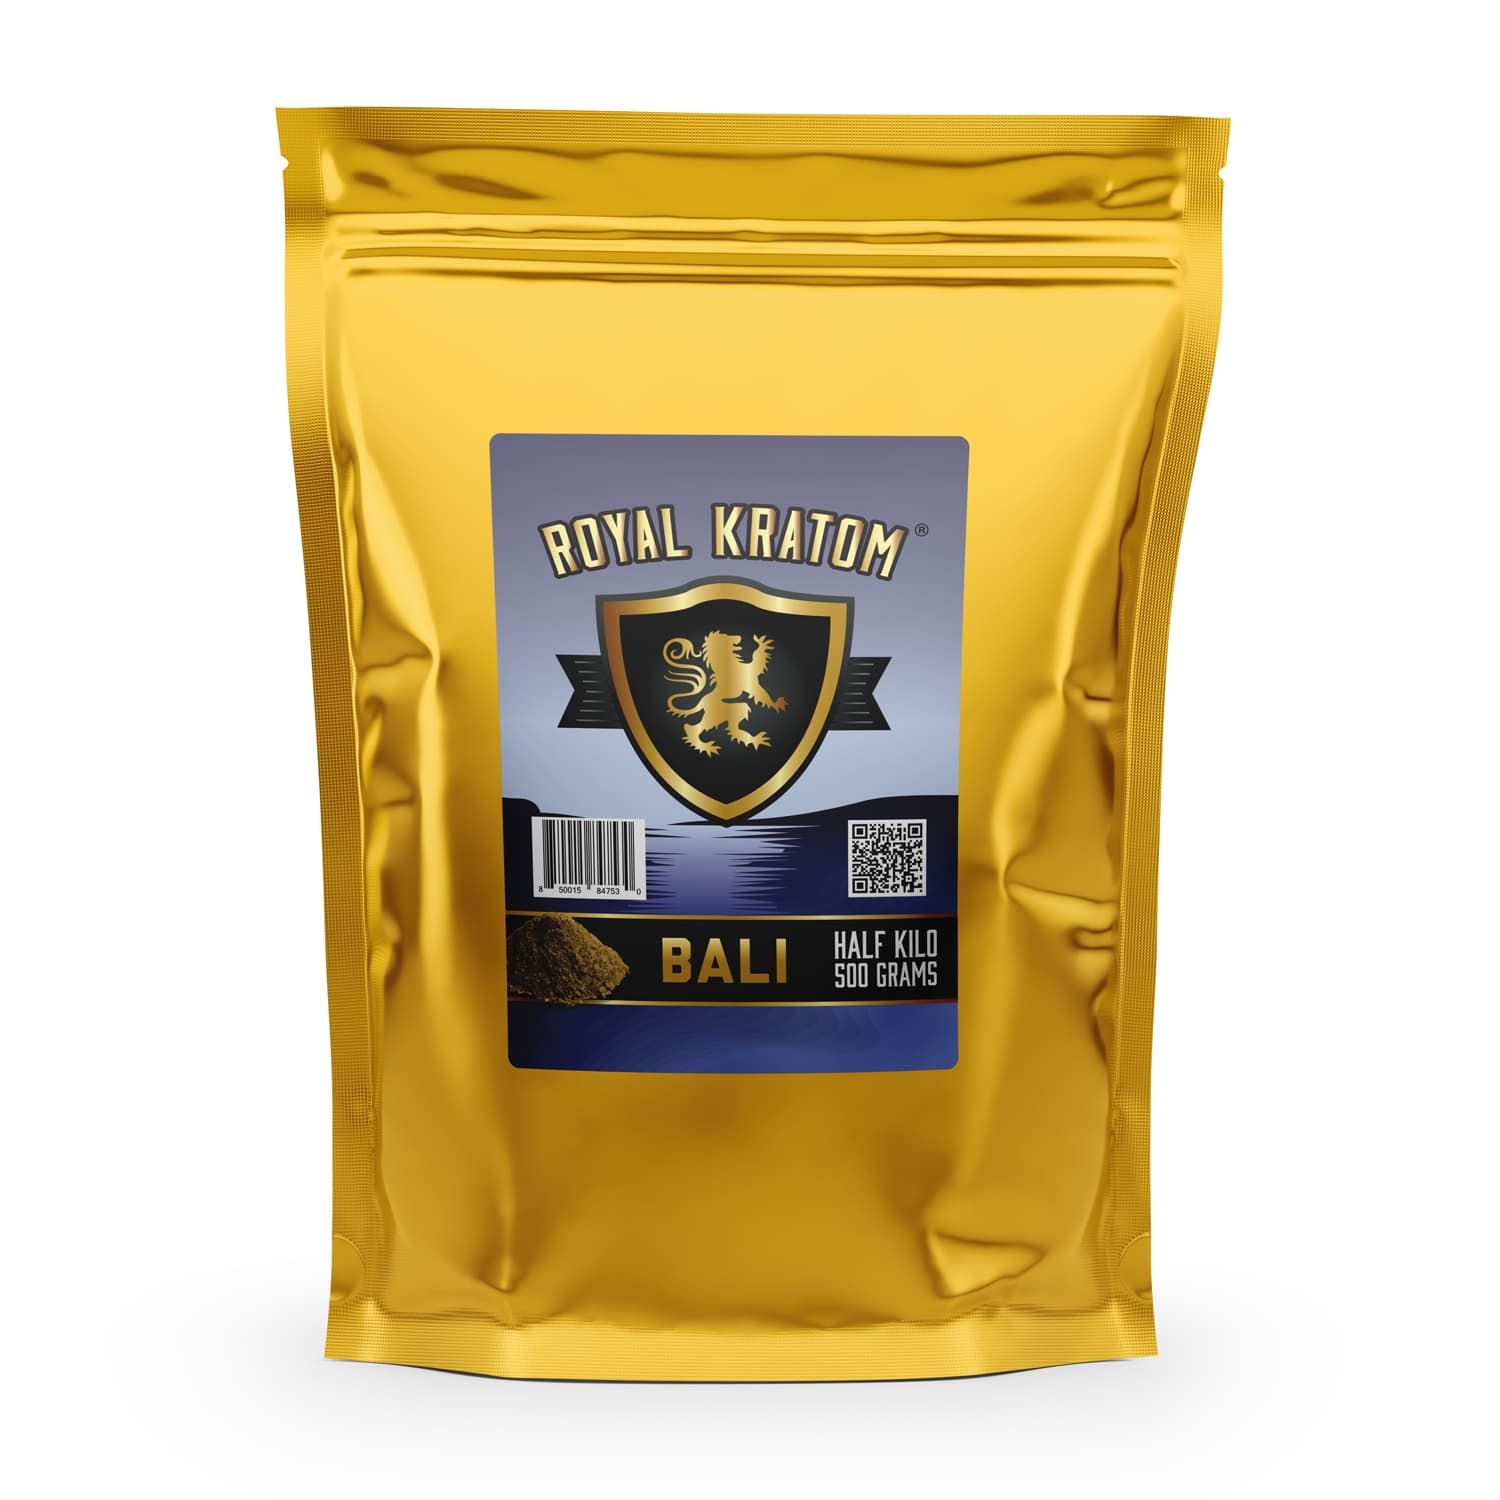 Royal Kratom Bali Kratom Powder 500 grams package